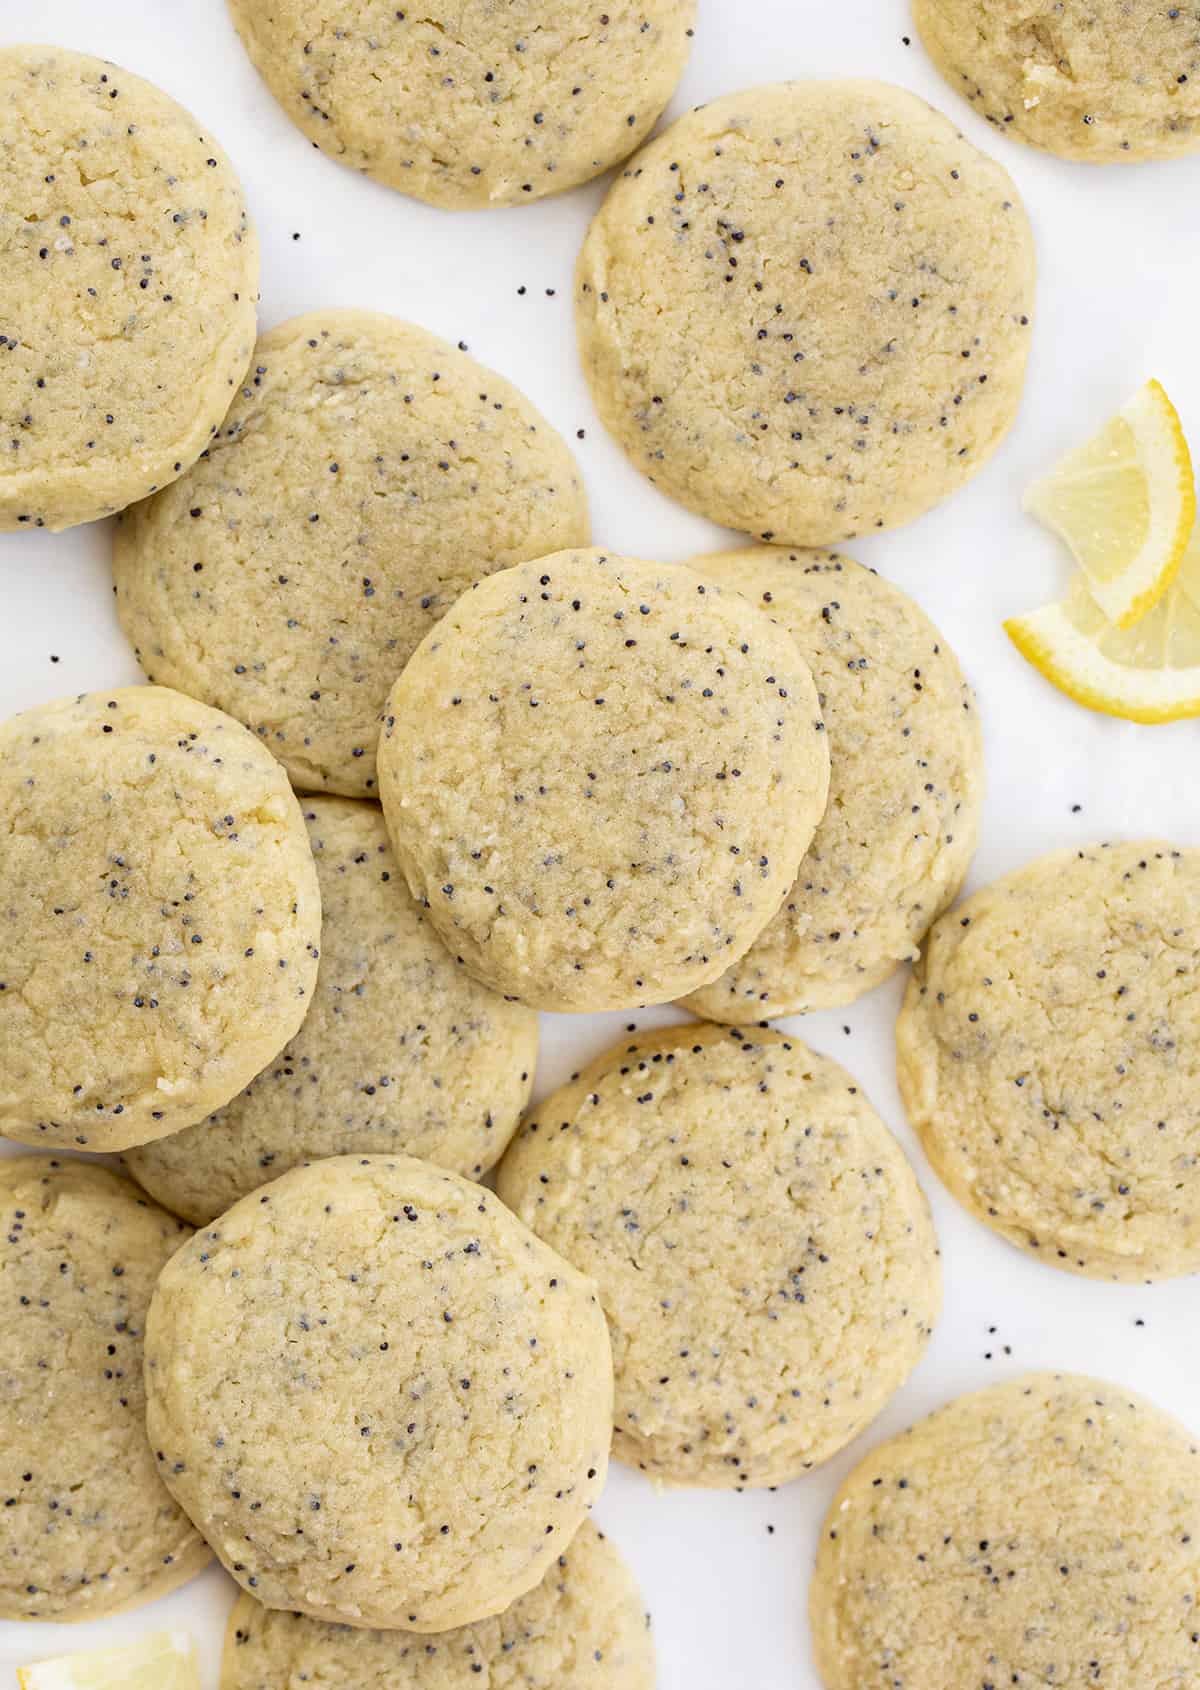 OVerhead of lemon Poppy Seed Muffins on a White Counter. Cookies, Baking, Cookie Recipes, Lemon Cookies, Lemon Poppyseed Recipes, Christmas Cookies, Dessert, Lemon Desserts, i am baker, iambaker